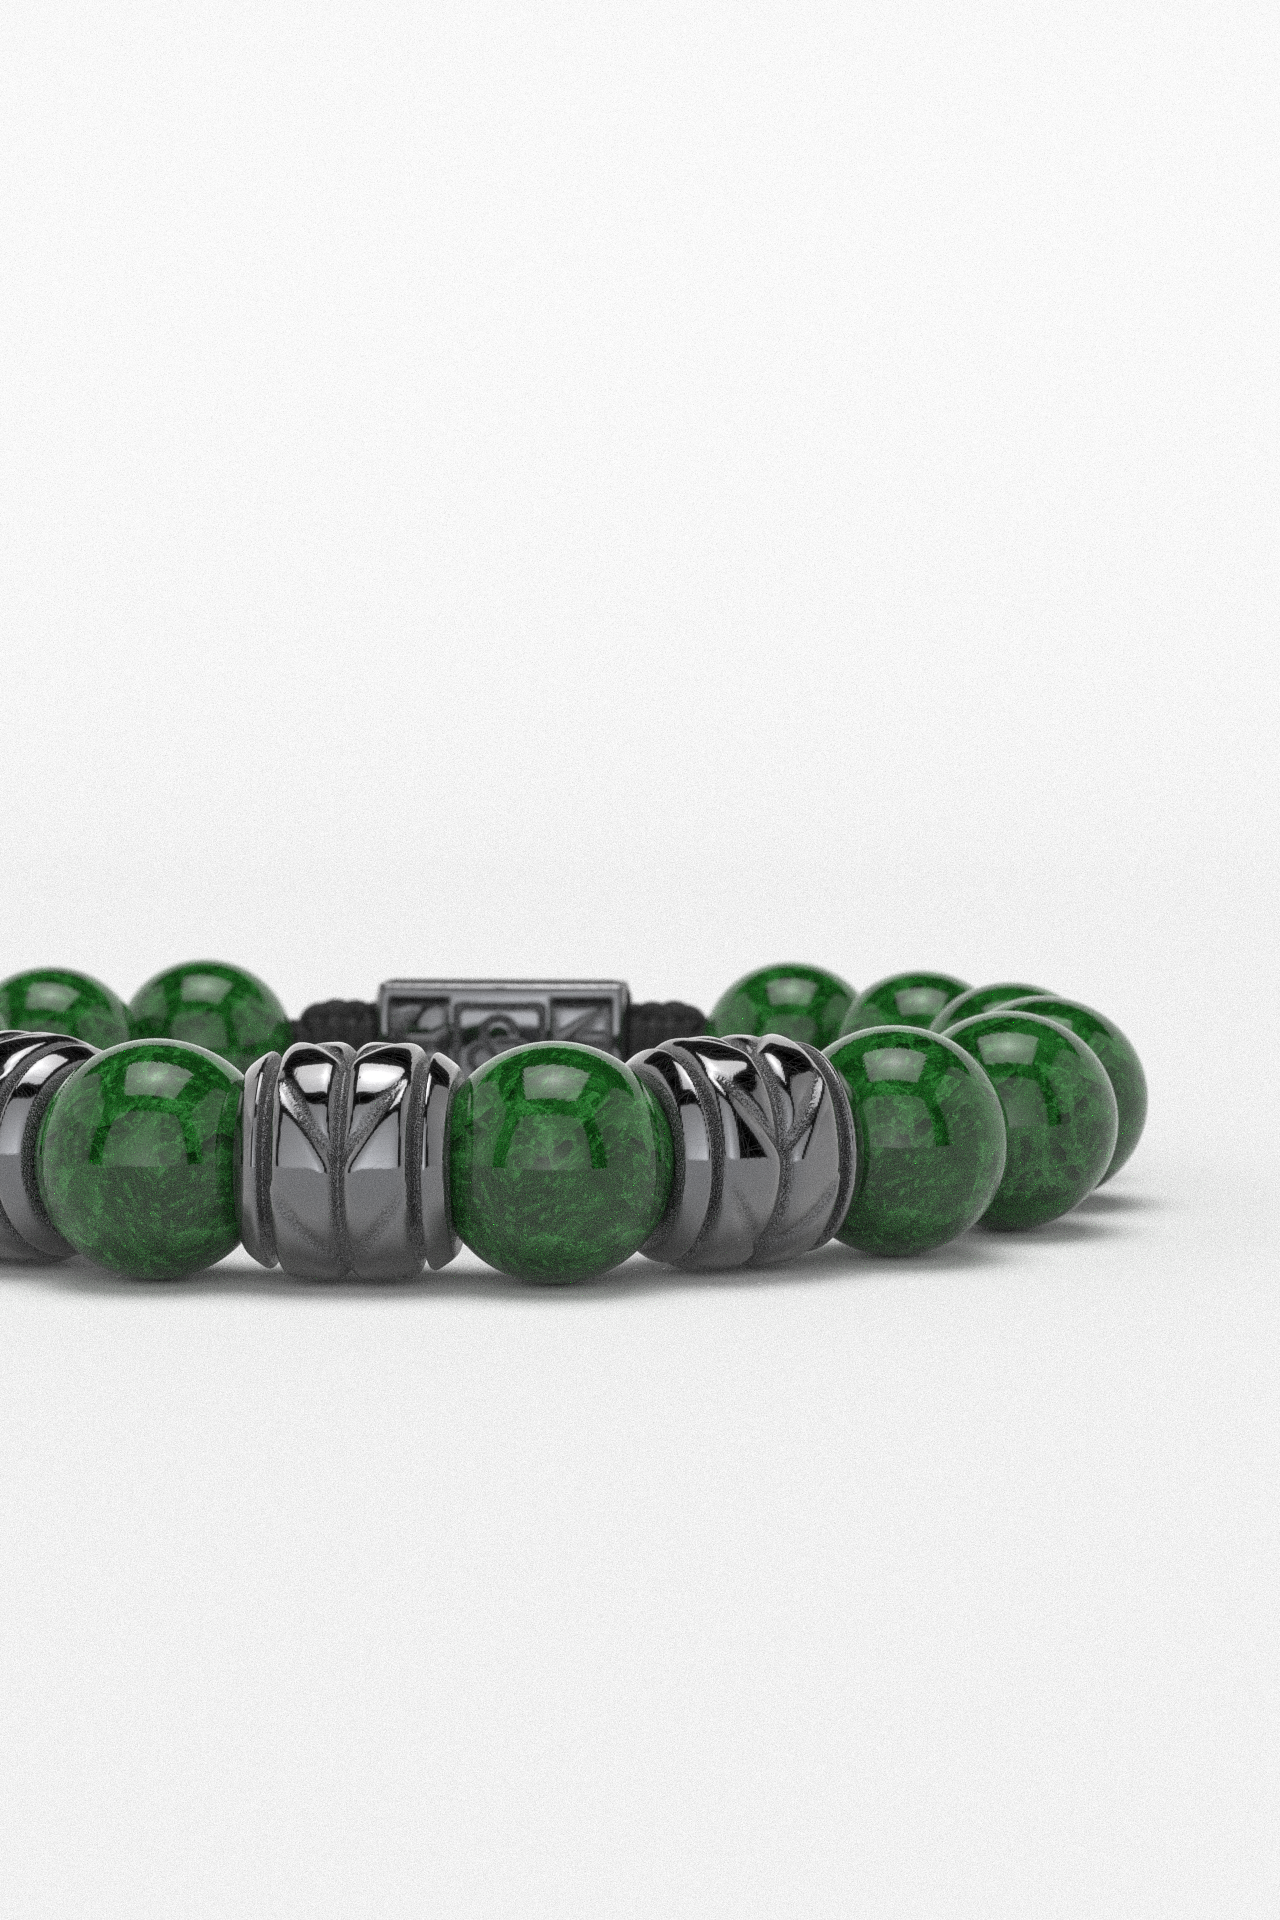 Emerald Jade Bracelet 12mm | Woven